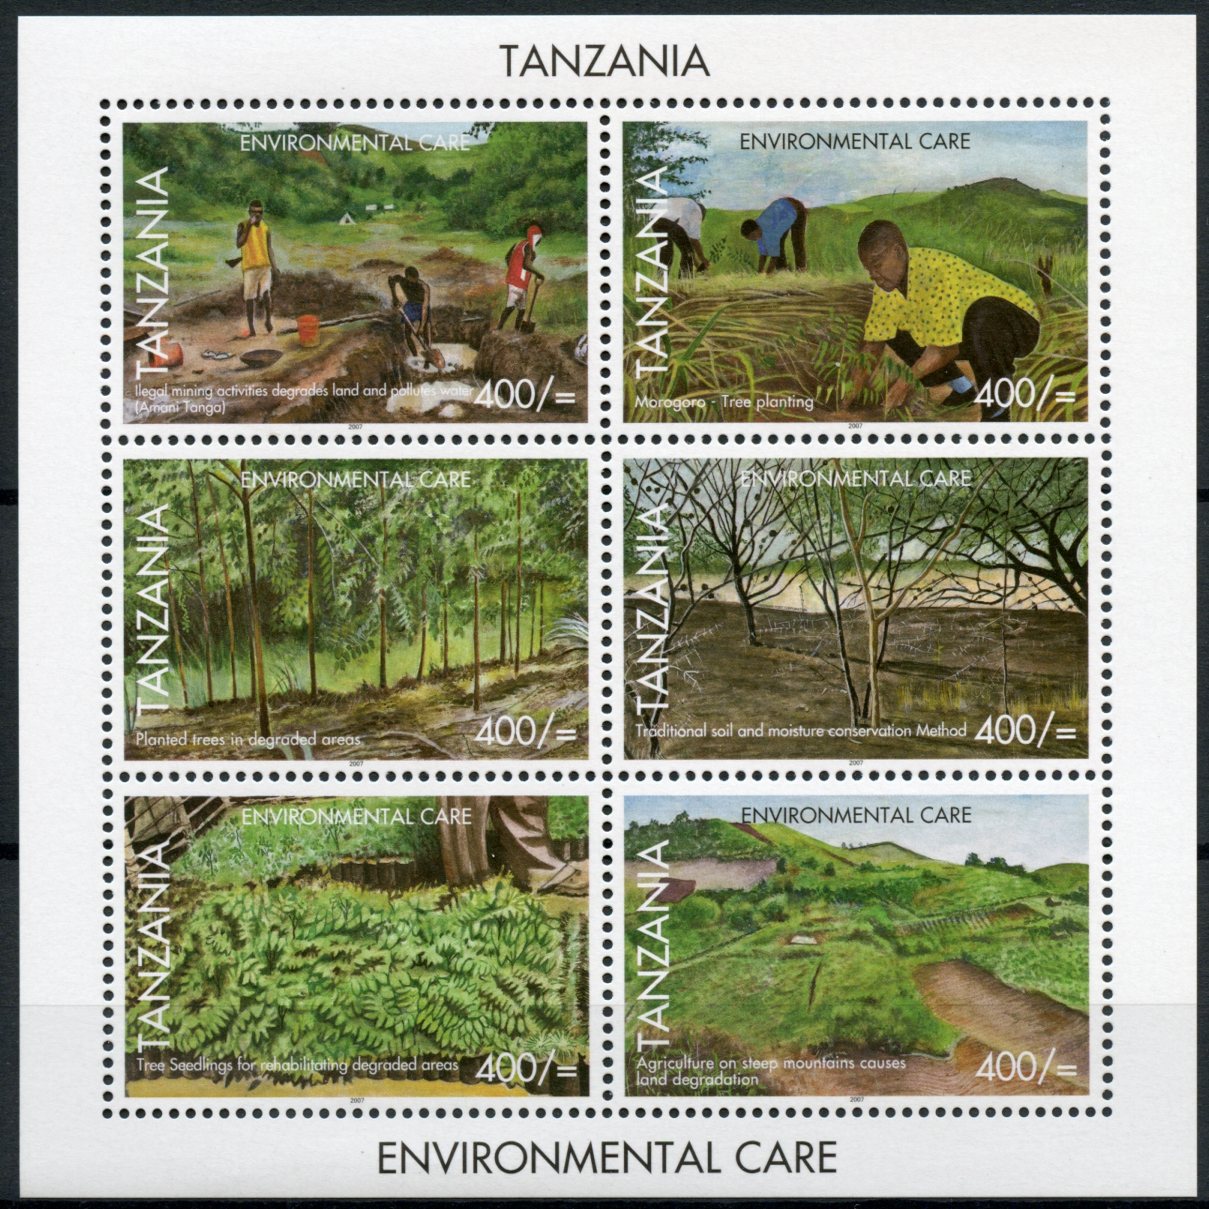 Tanzania 2007 MNH Environmental Care 6v M/S Plants Trees Morogoro Amani Tanga